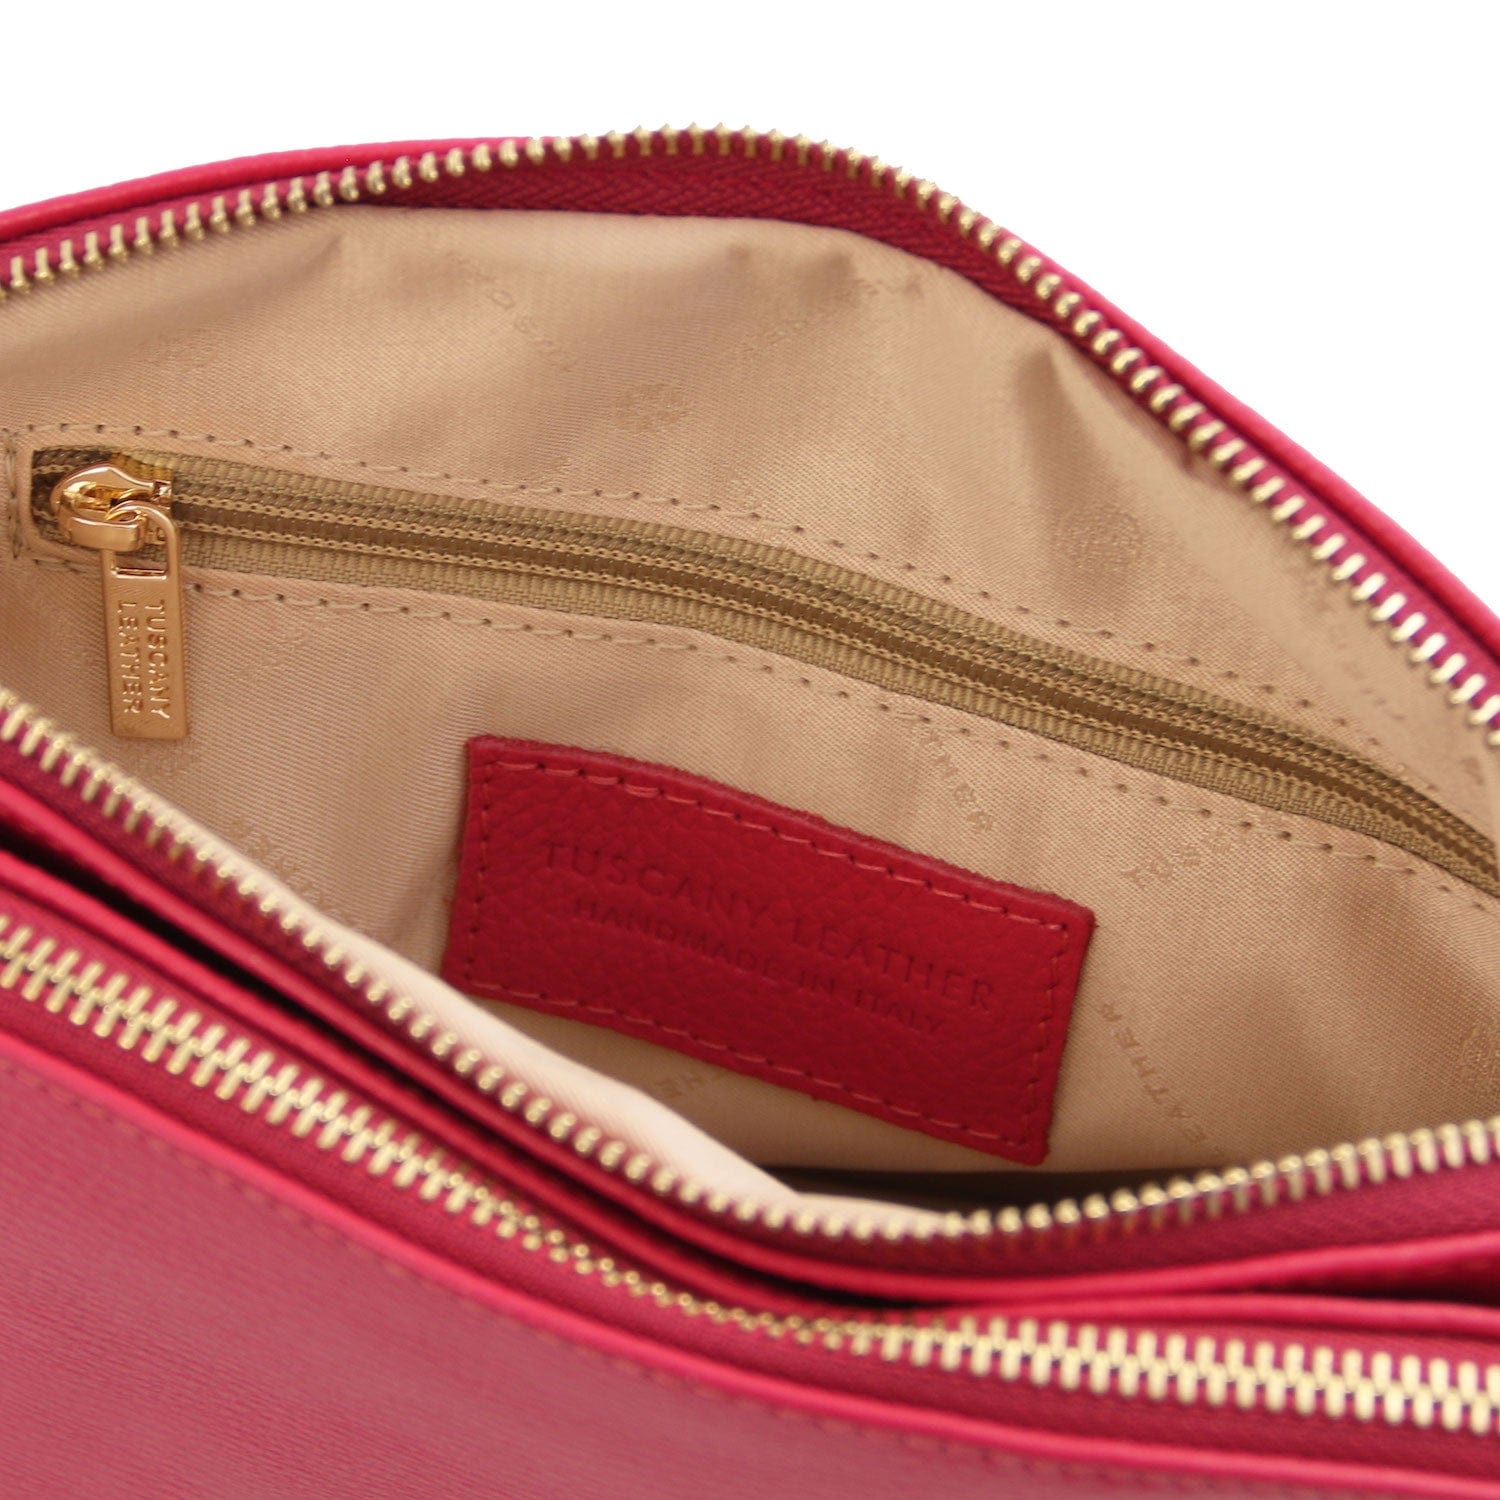 Lily - Soft leather shoulder bag | TL142375 - Premium Leather handbags - Shop now at San Rocco Italia